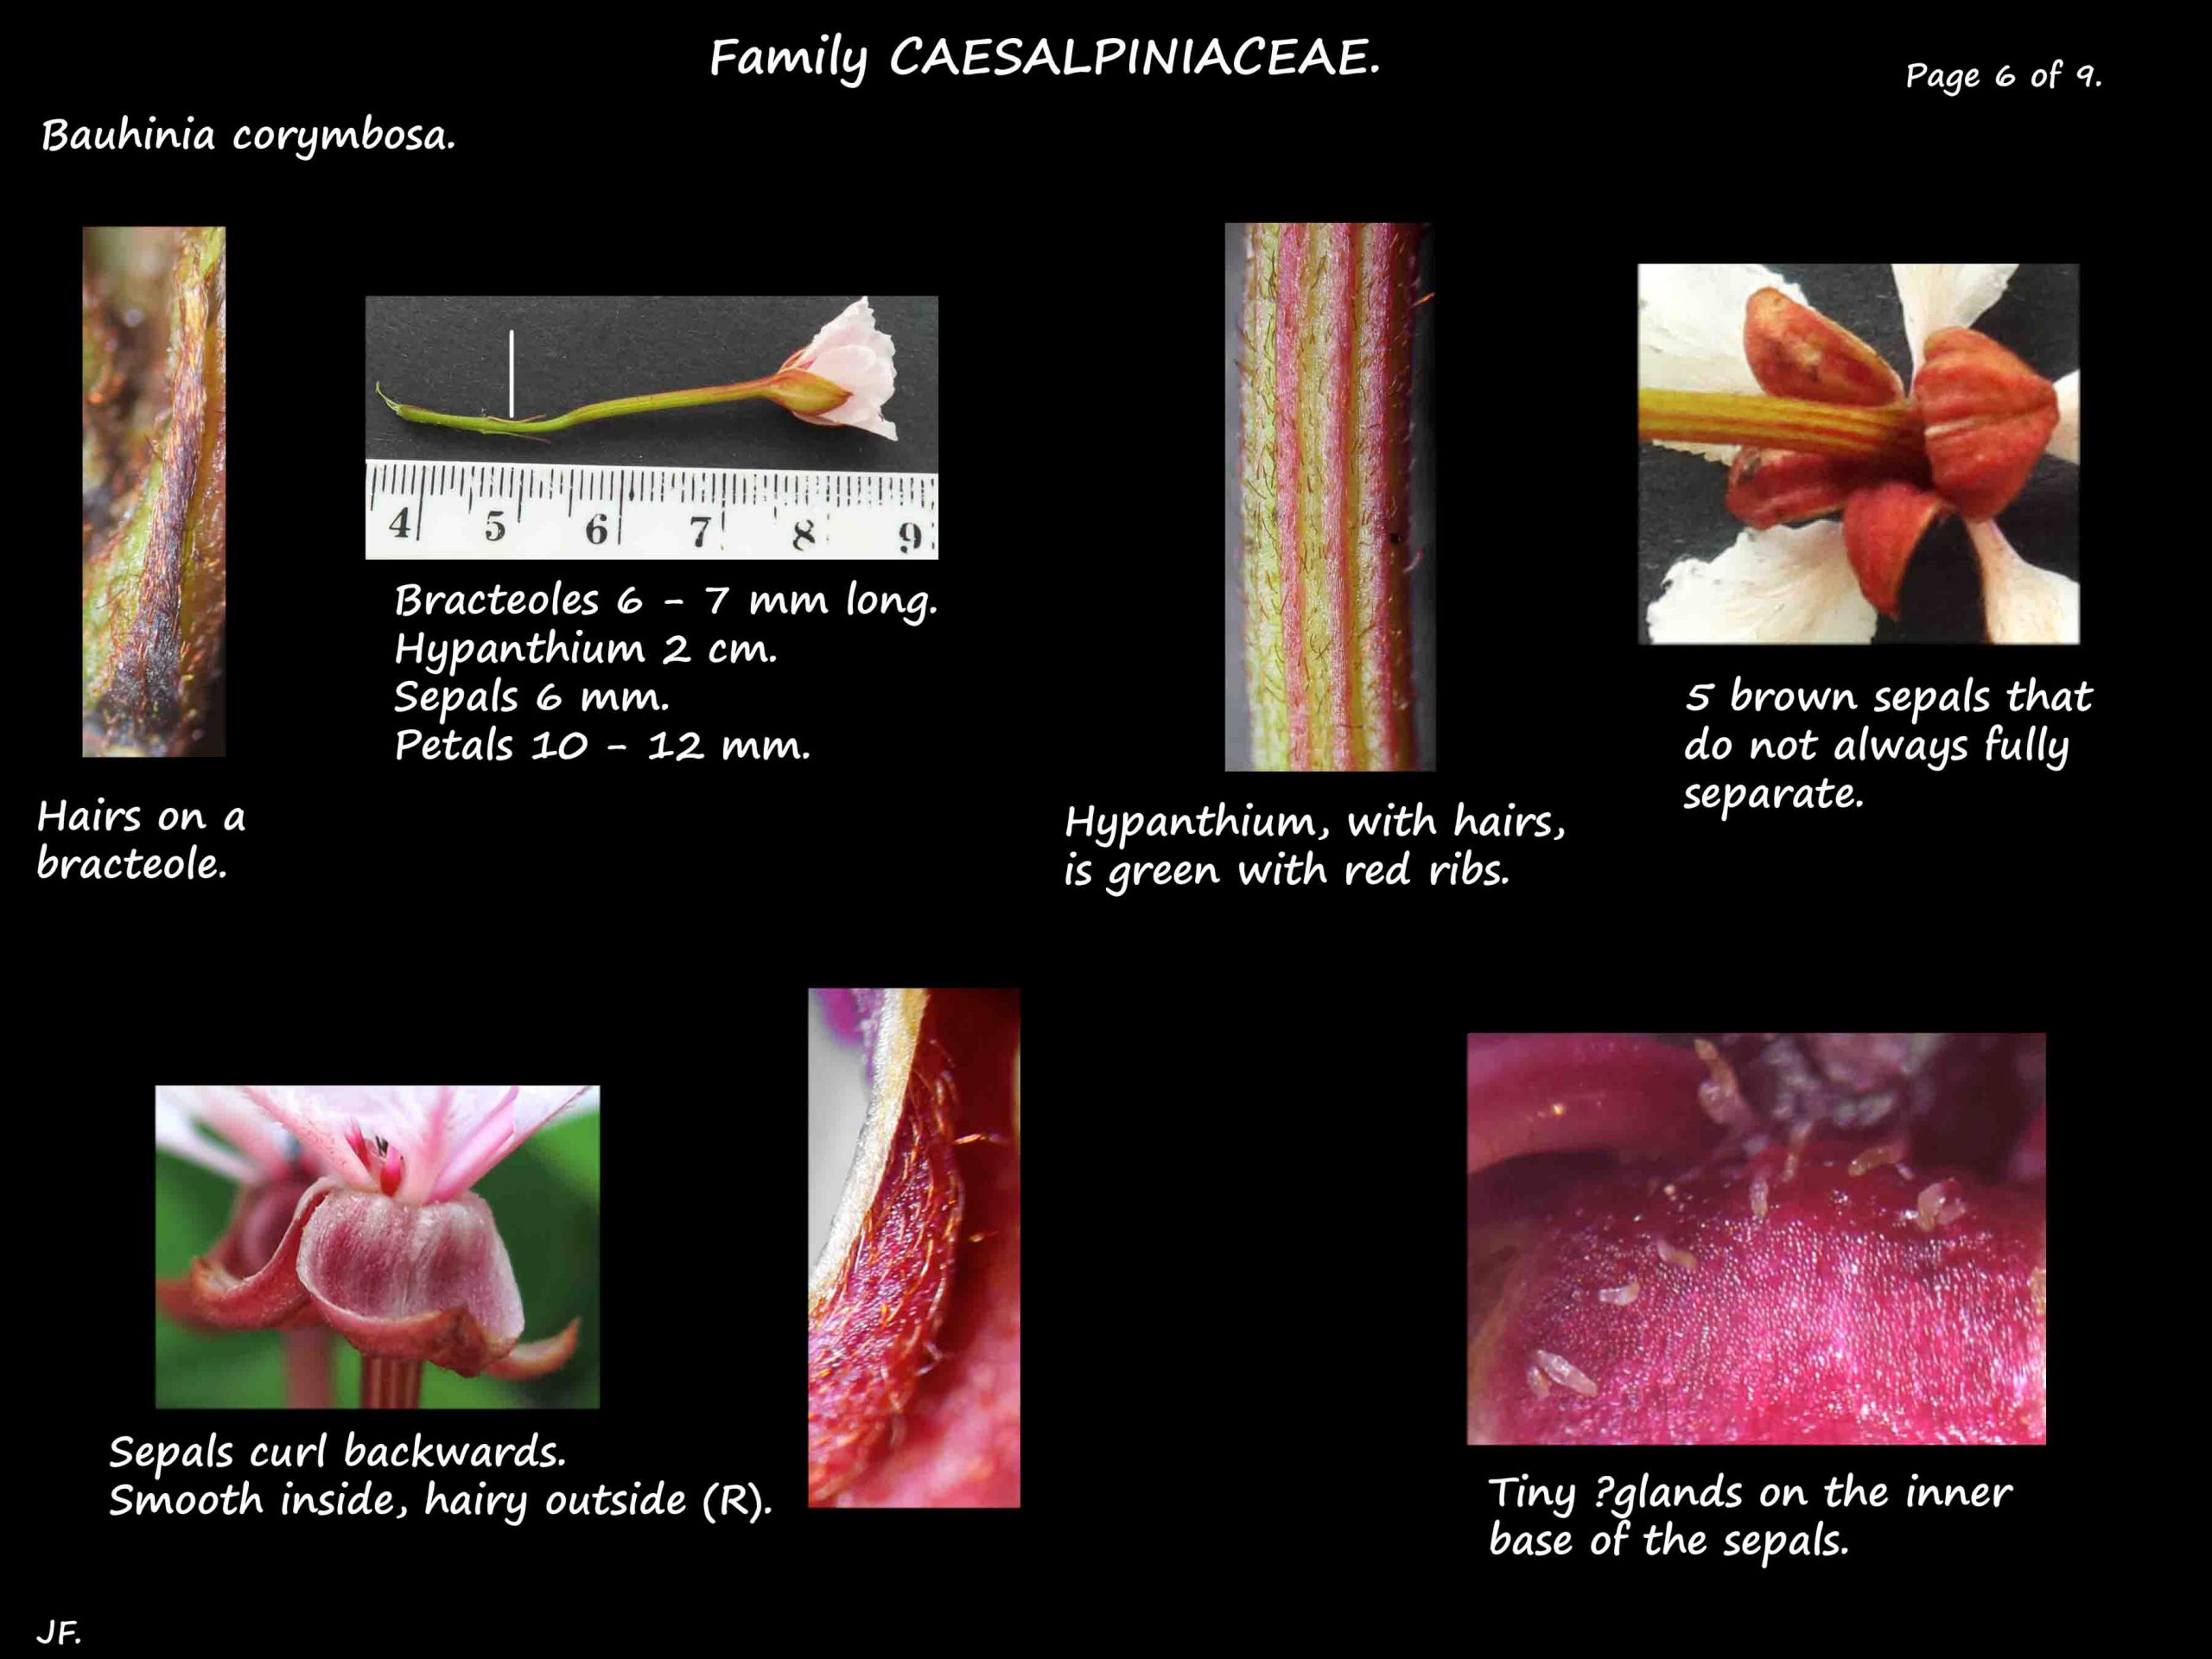 6 Bauhinia corymbosa bracteoles & sepals